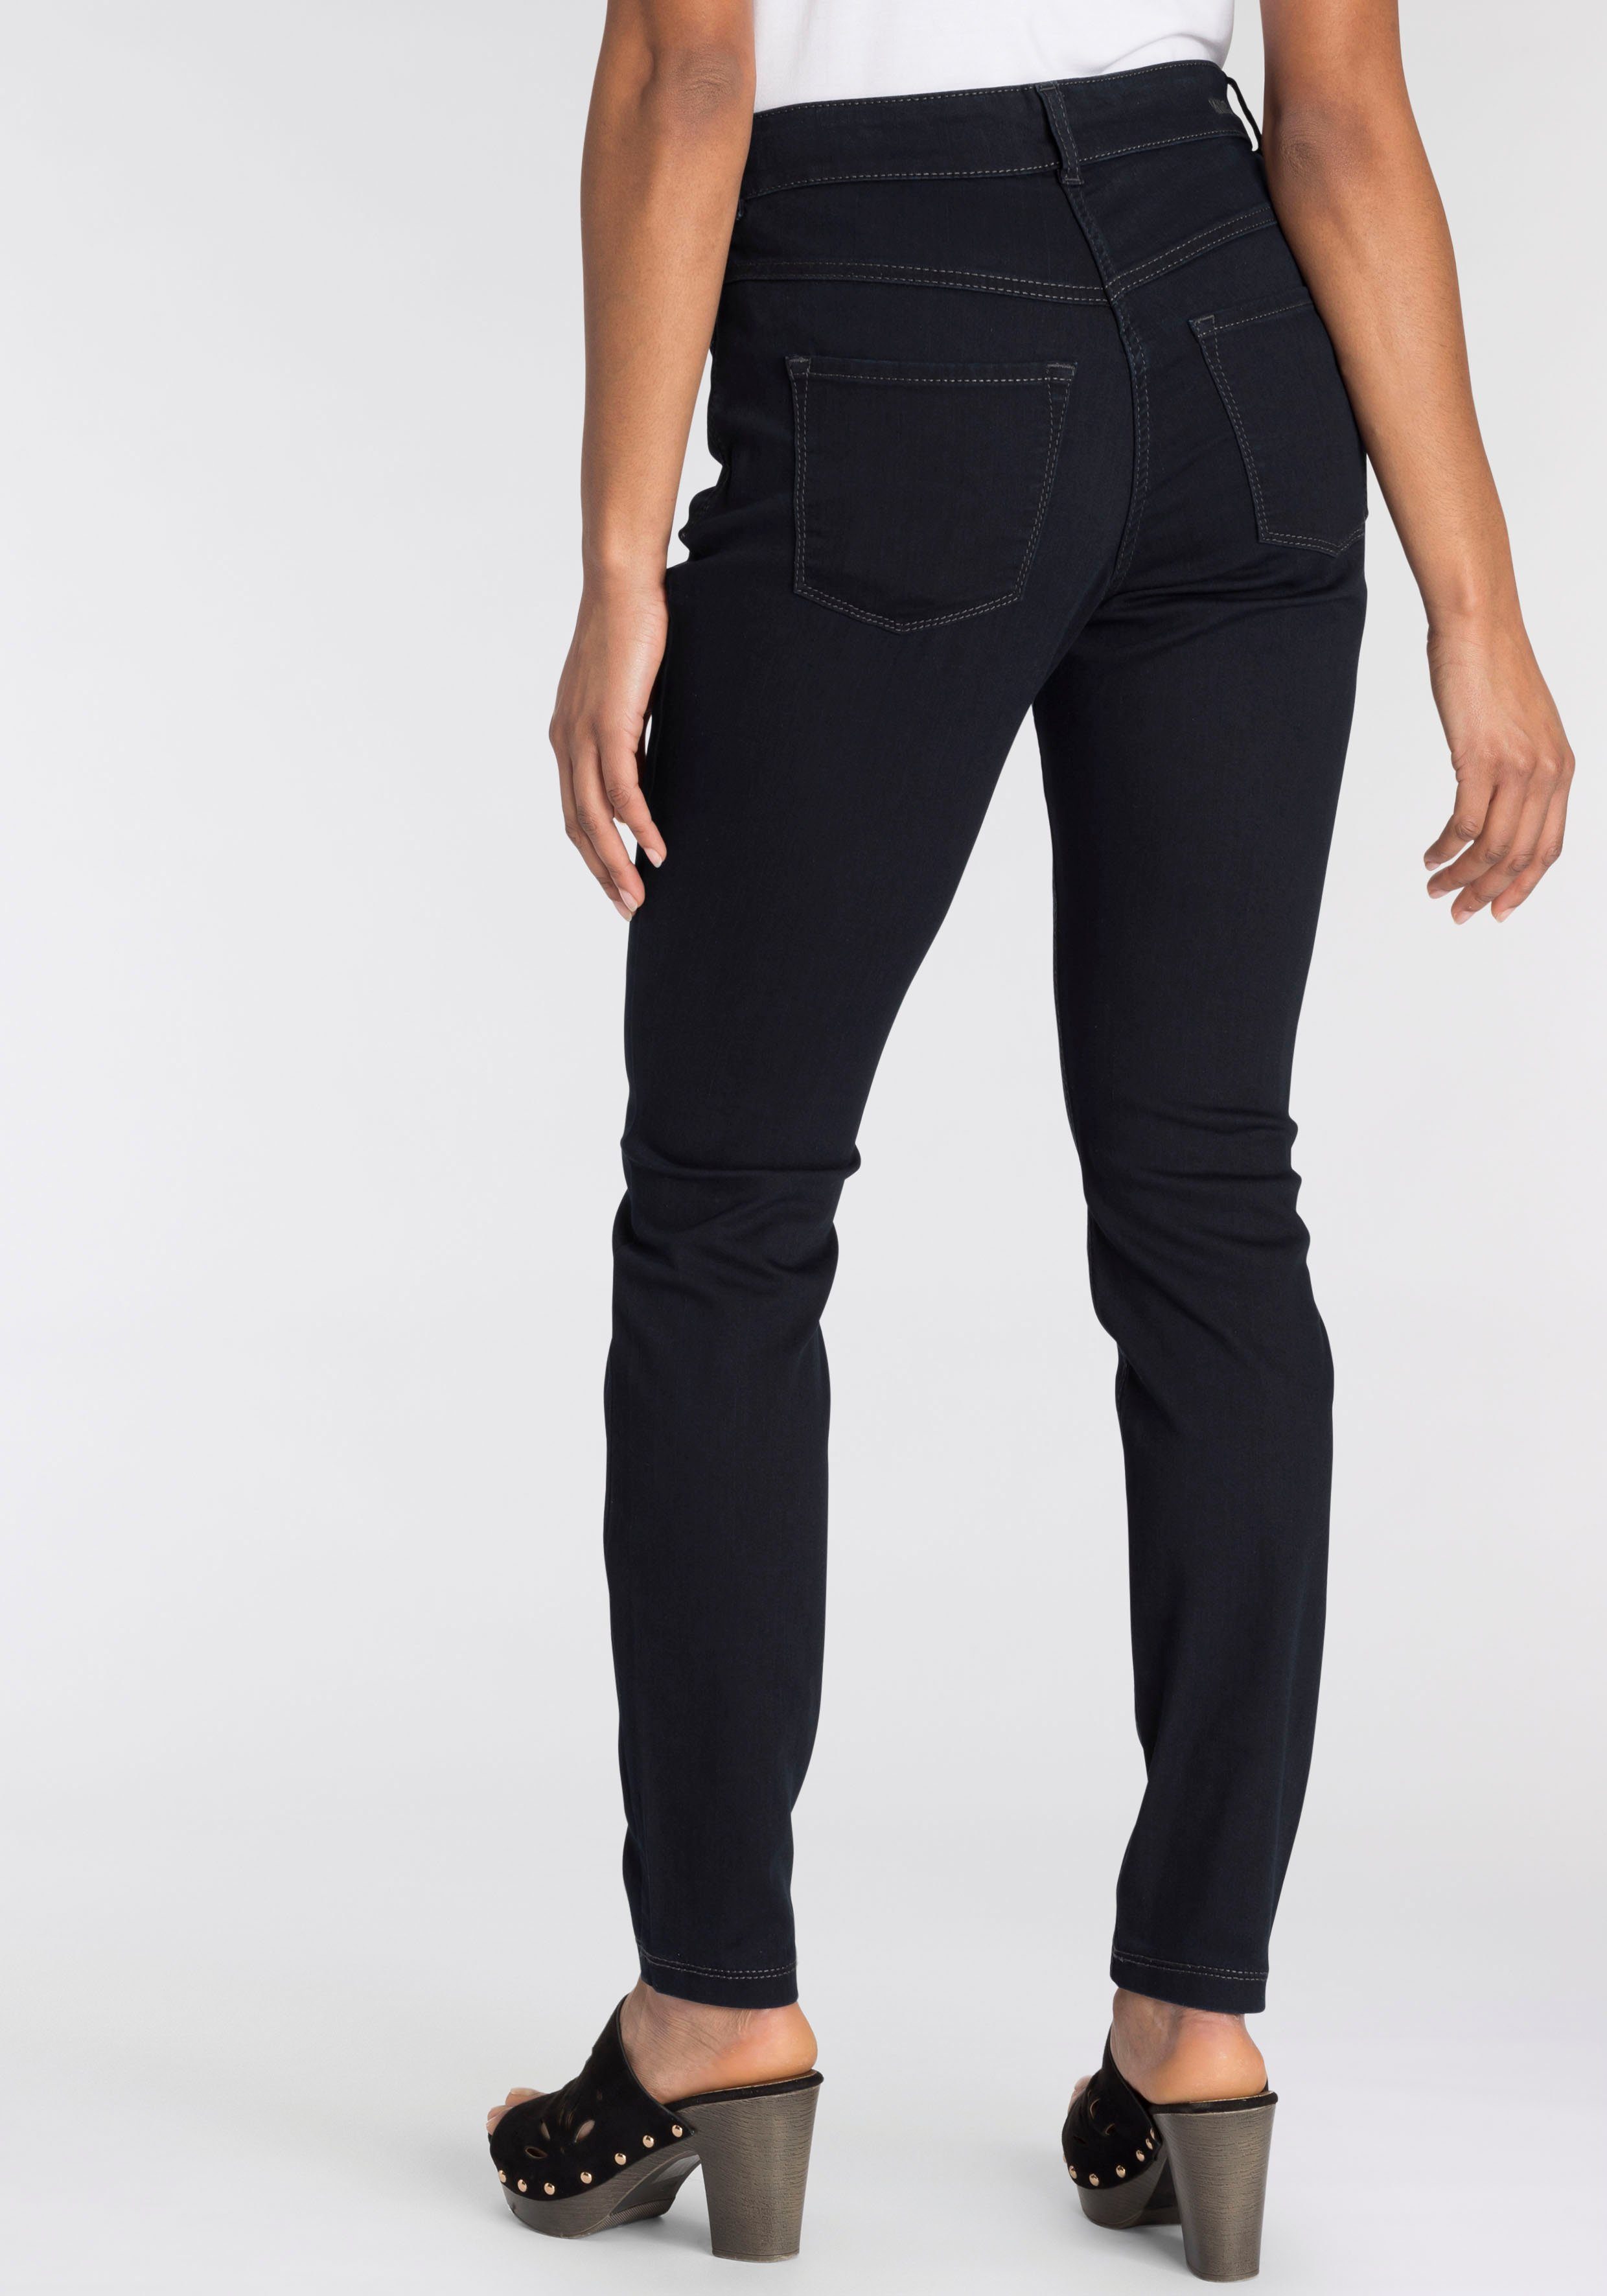 MAC Skinny-fit-Jeans Hiperstretch-Skinny Power-Stretch bequem Tag den Qualität ganzen sitzt